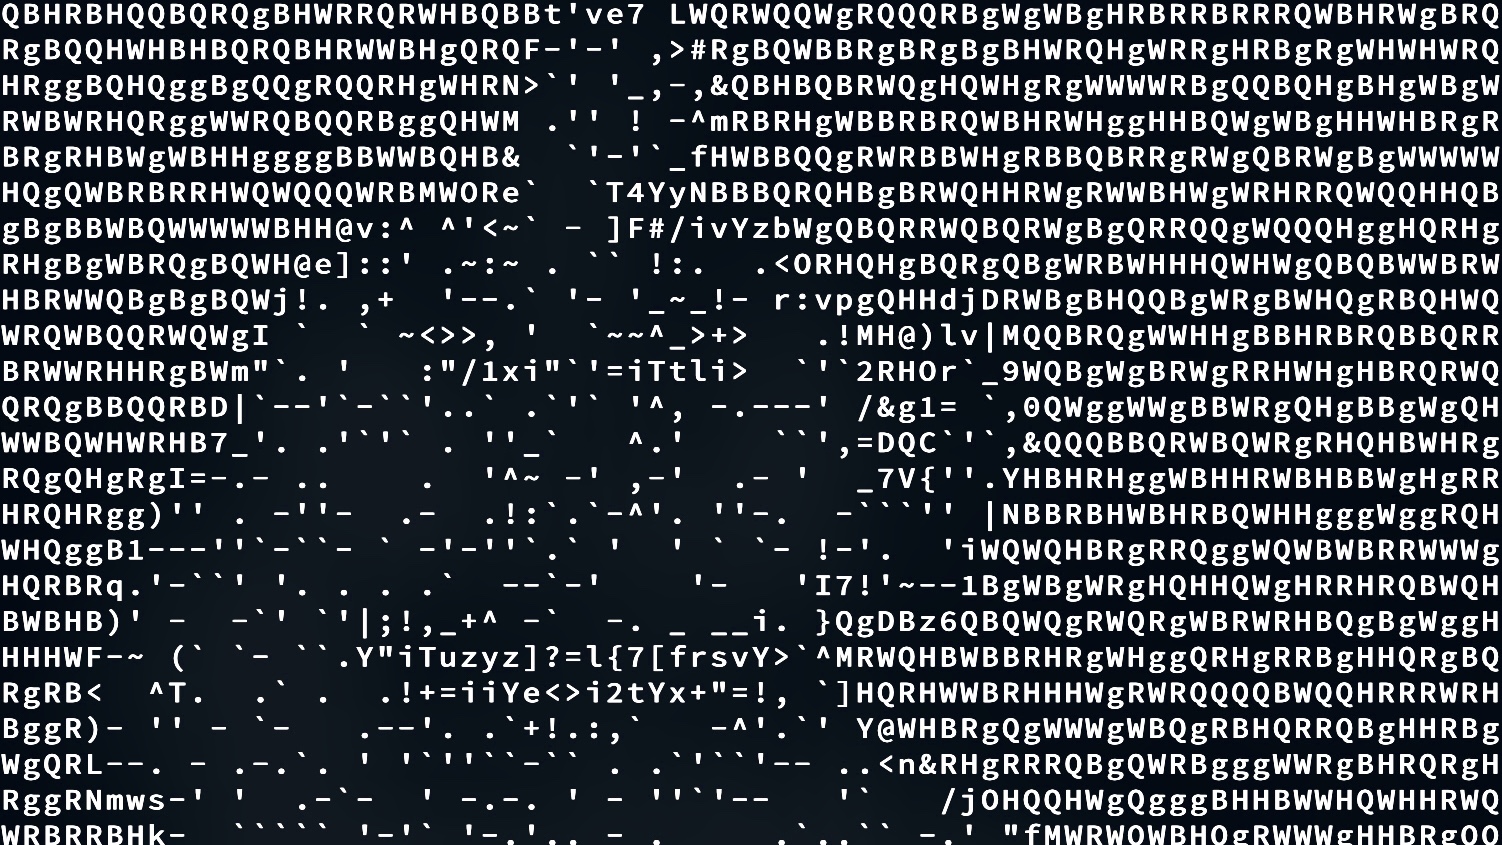 Batman ASCII kódban megrajzolva.